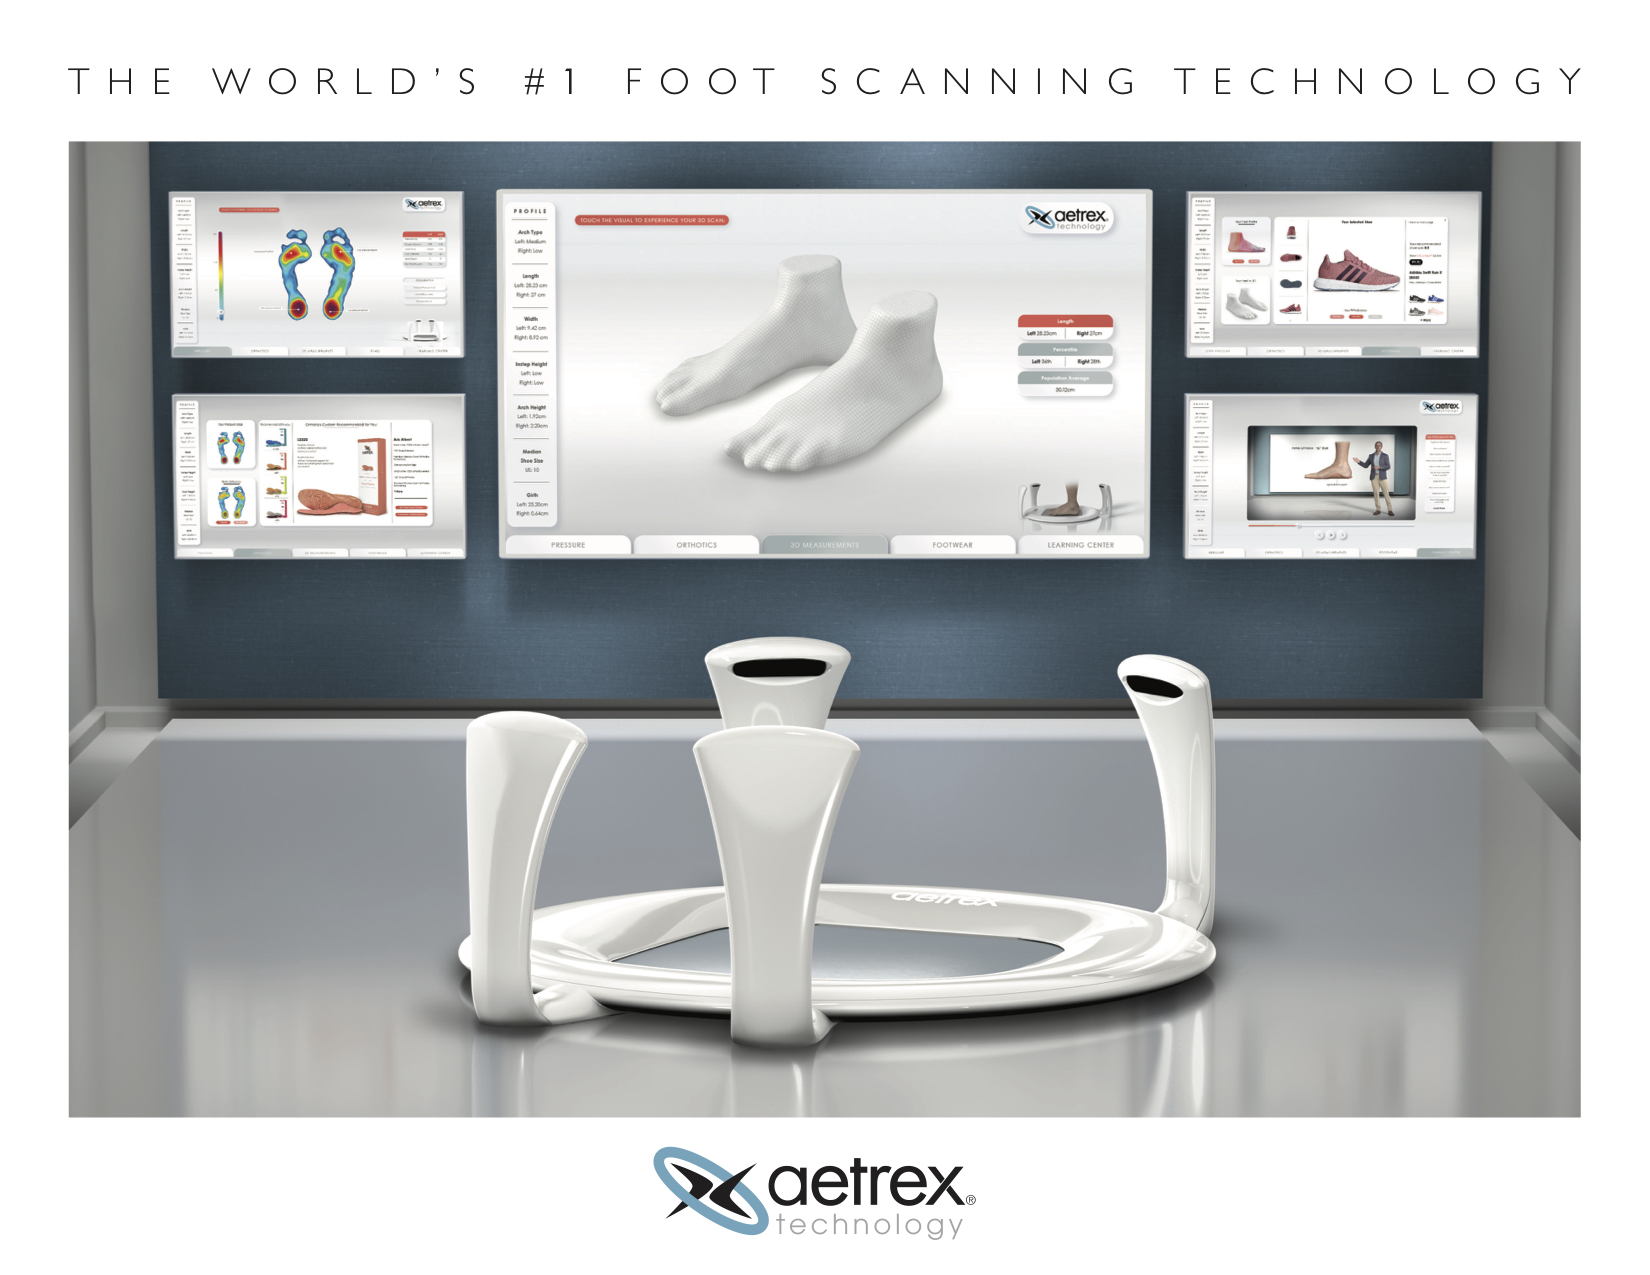 Aetrex Foot Scanning Technology